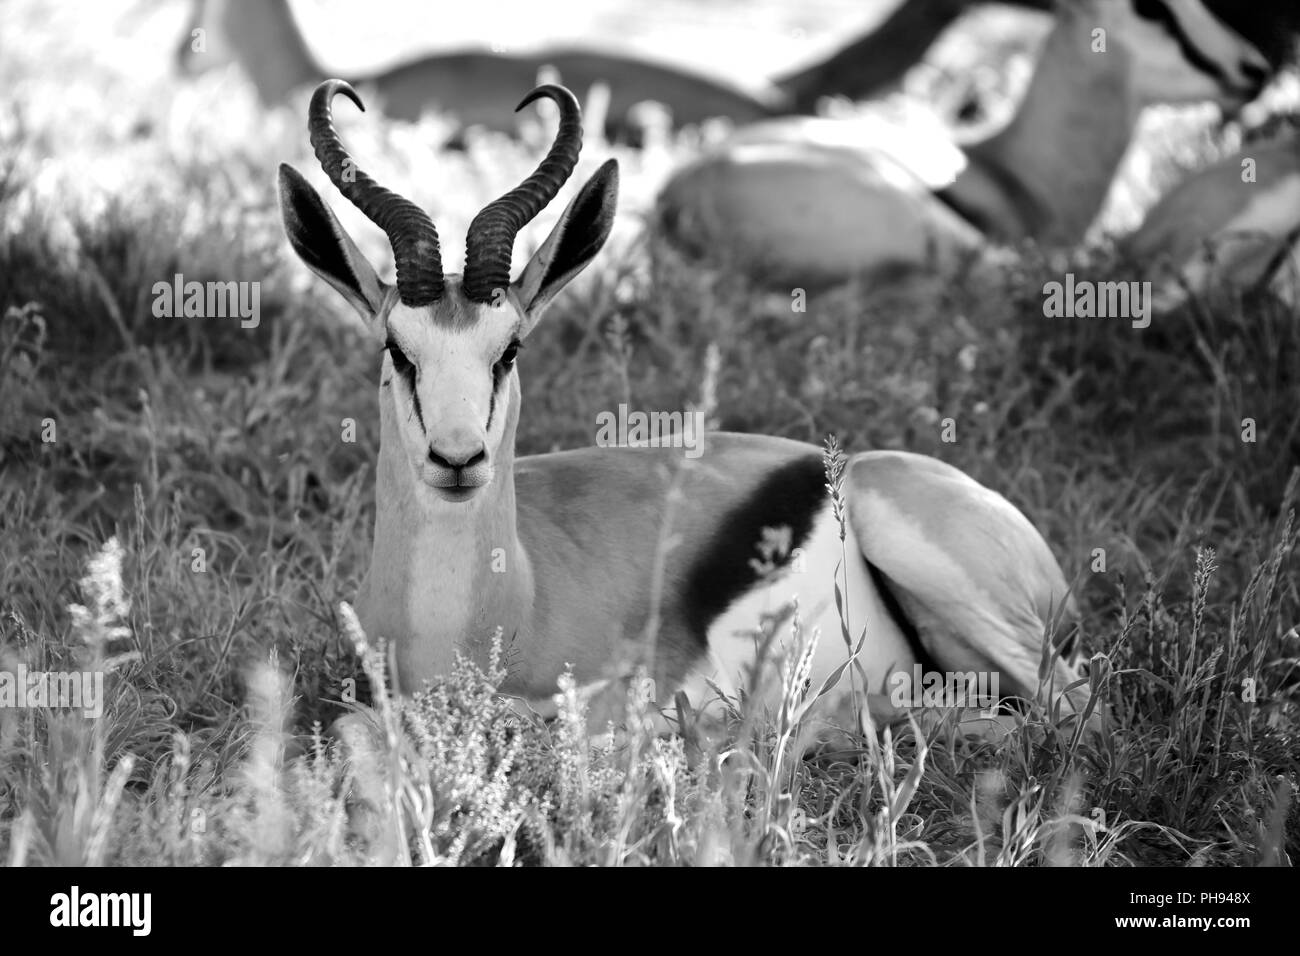 Gazelle Black and White Stock Photos & Images - Alamy